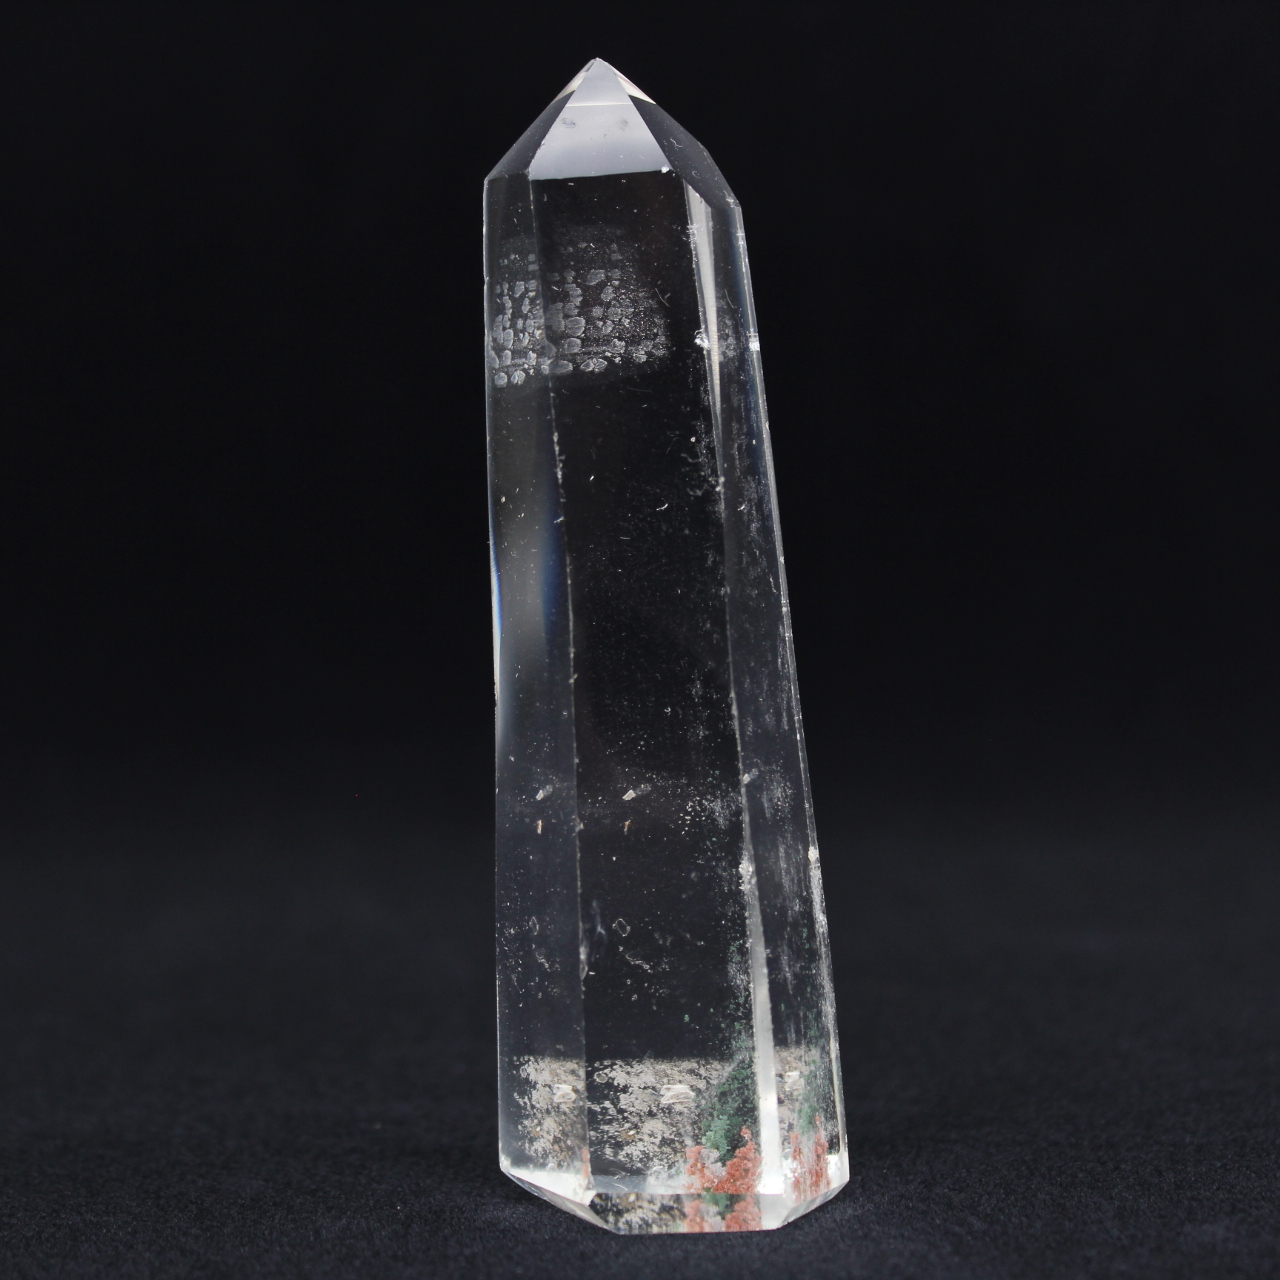 Prisma de cristal de roca ornamental